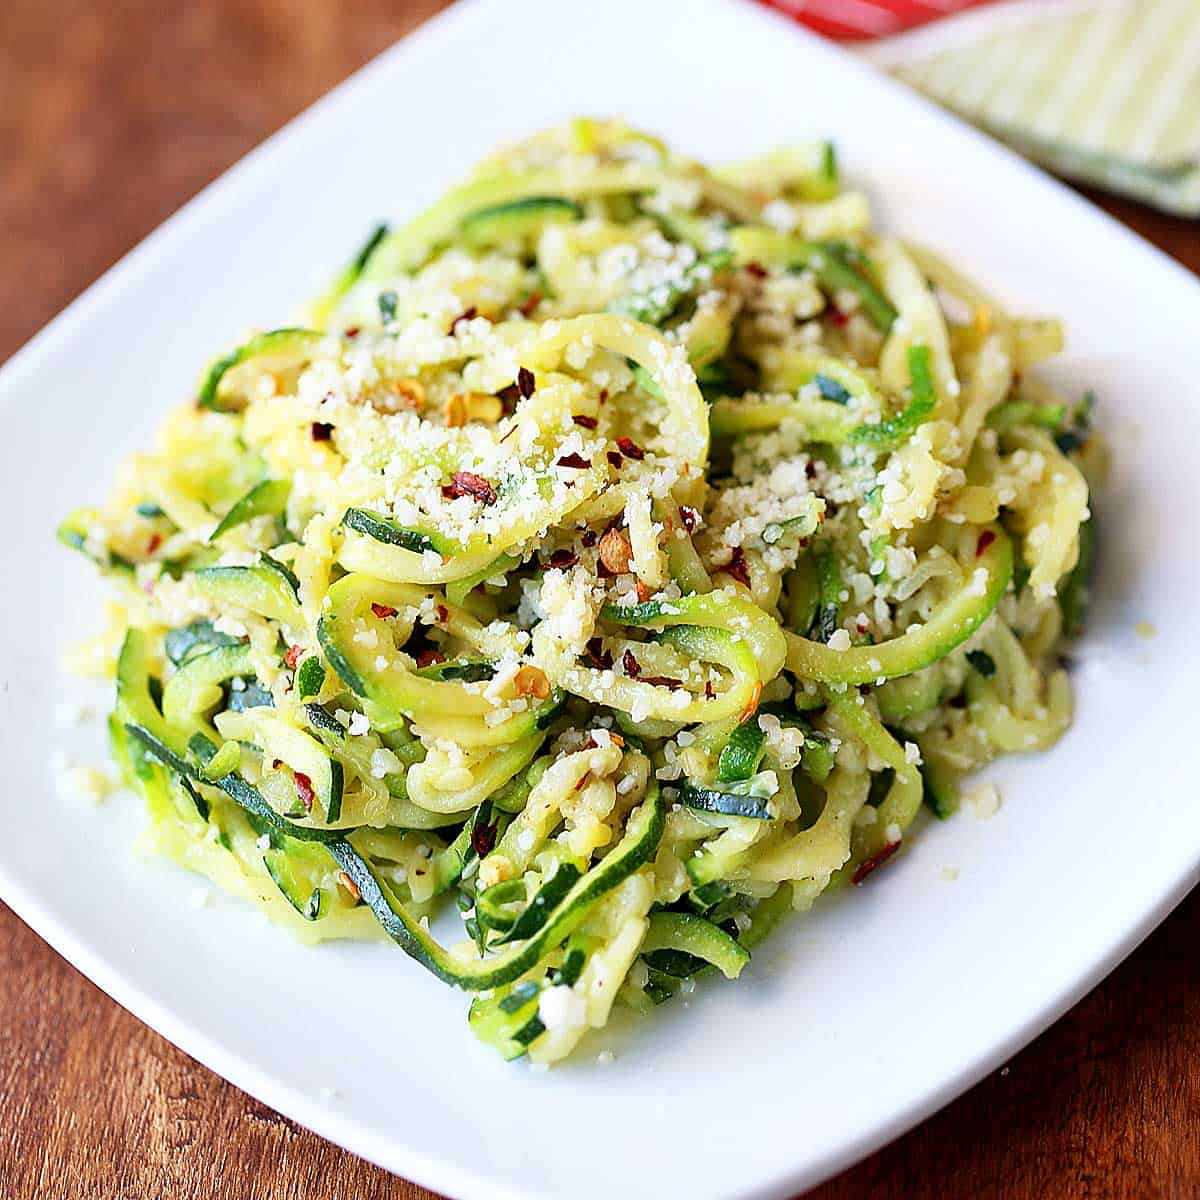 Top 4 Zucchini Noodles Recipes